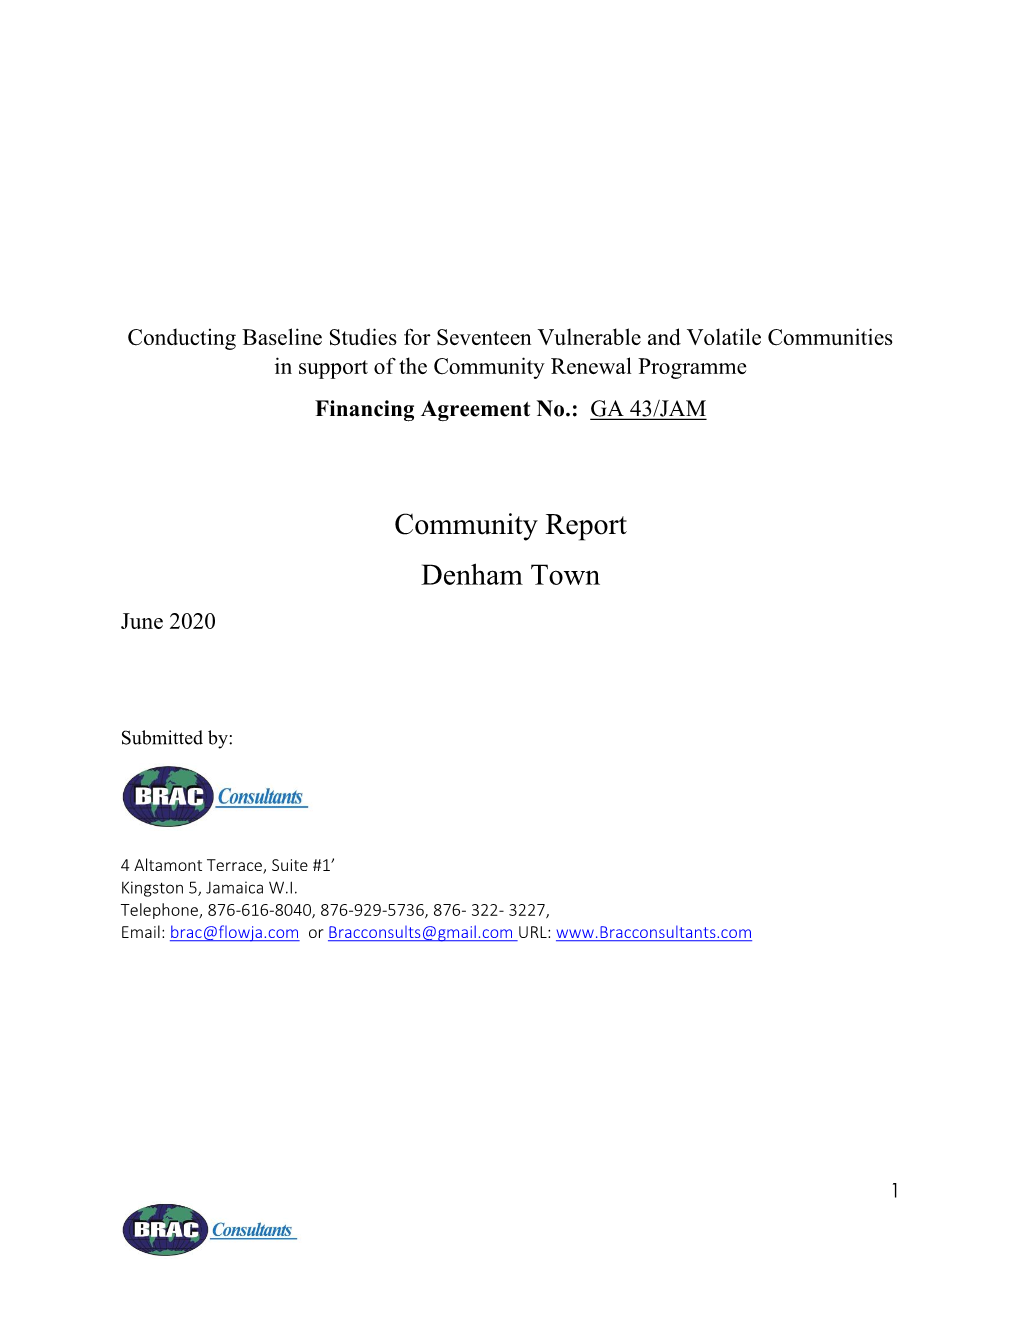 Community Report Denham Town June 2020